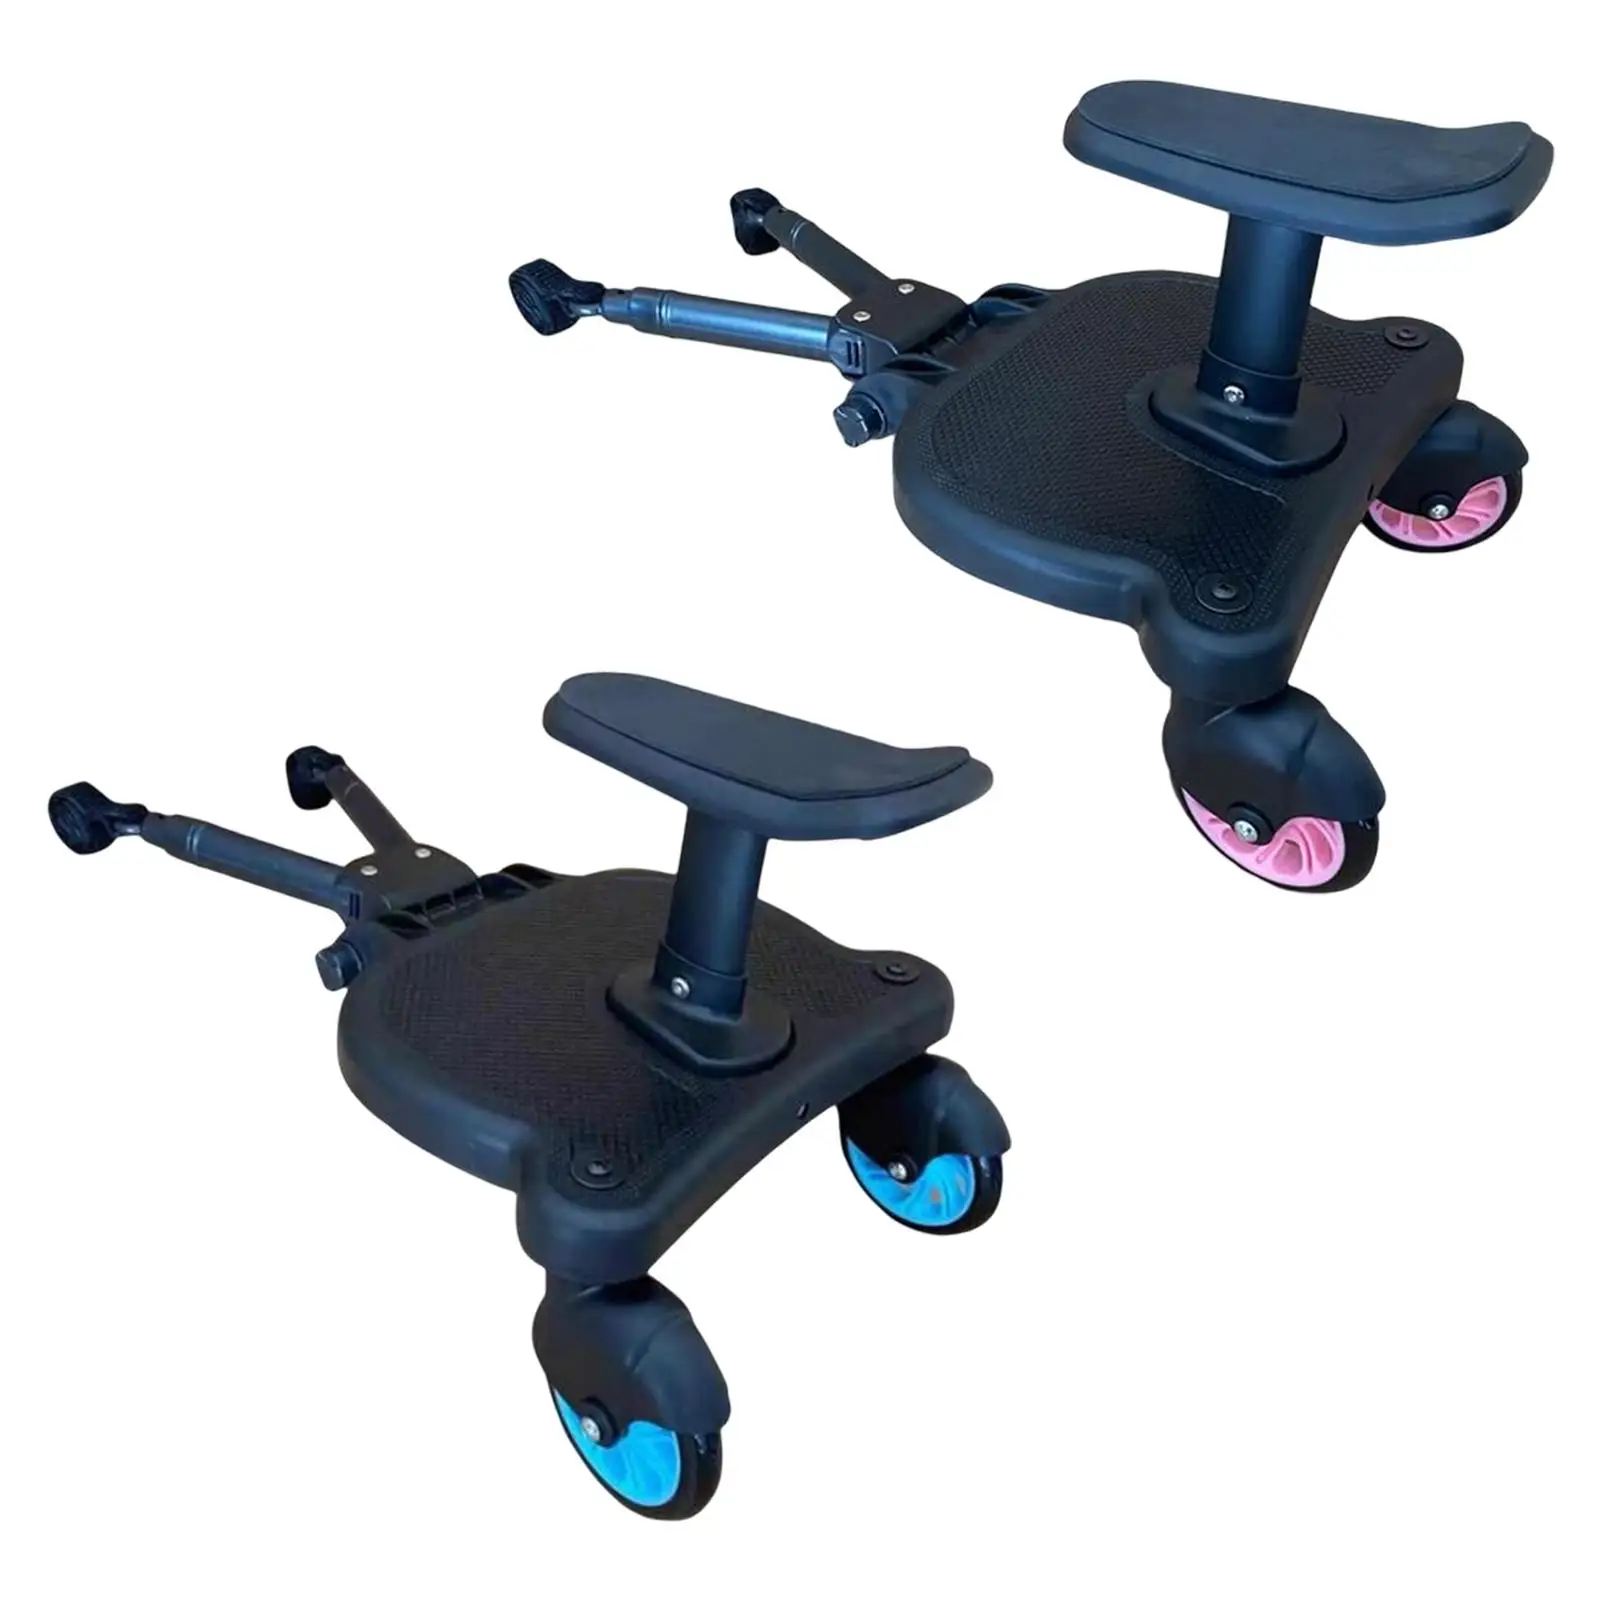 Pram Pedal Adapter Glider Board Stroller Glider Board for Most Brands of Strollers